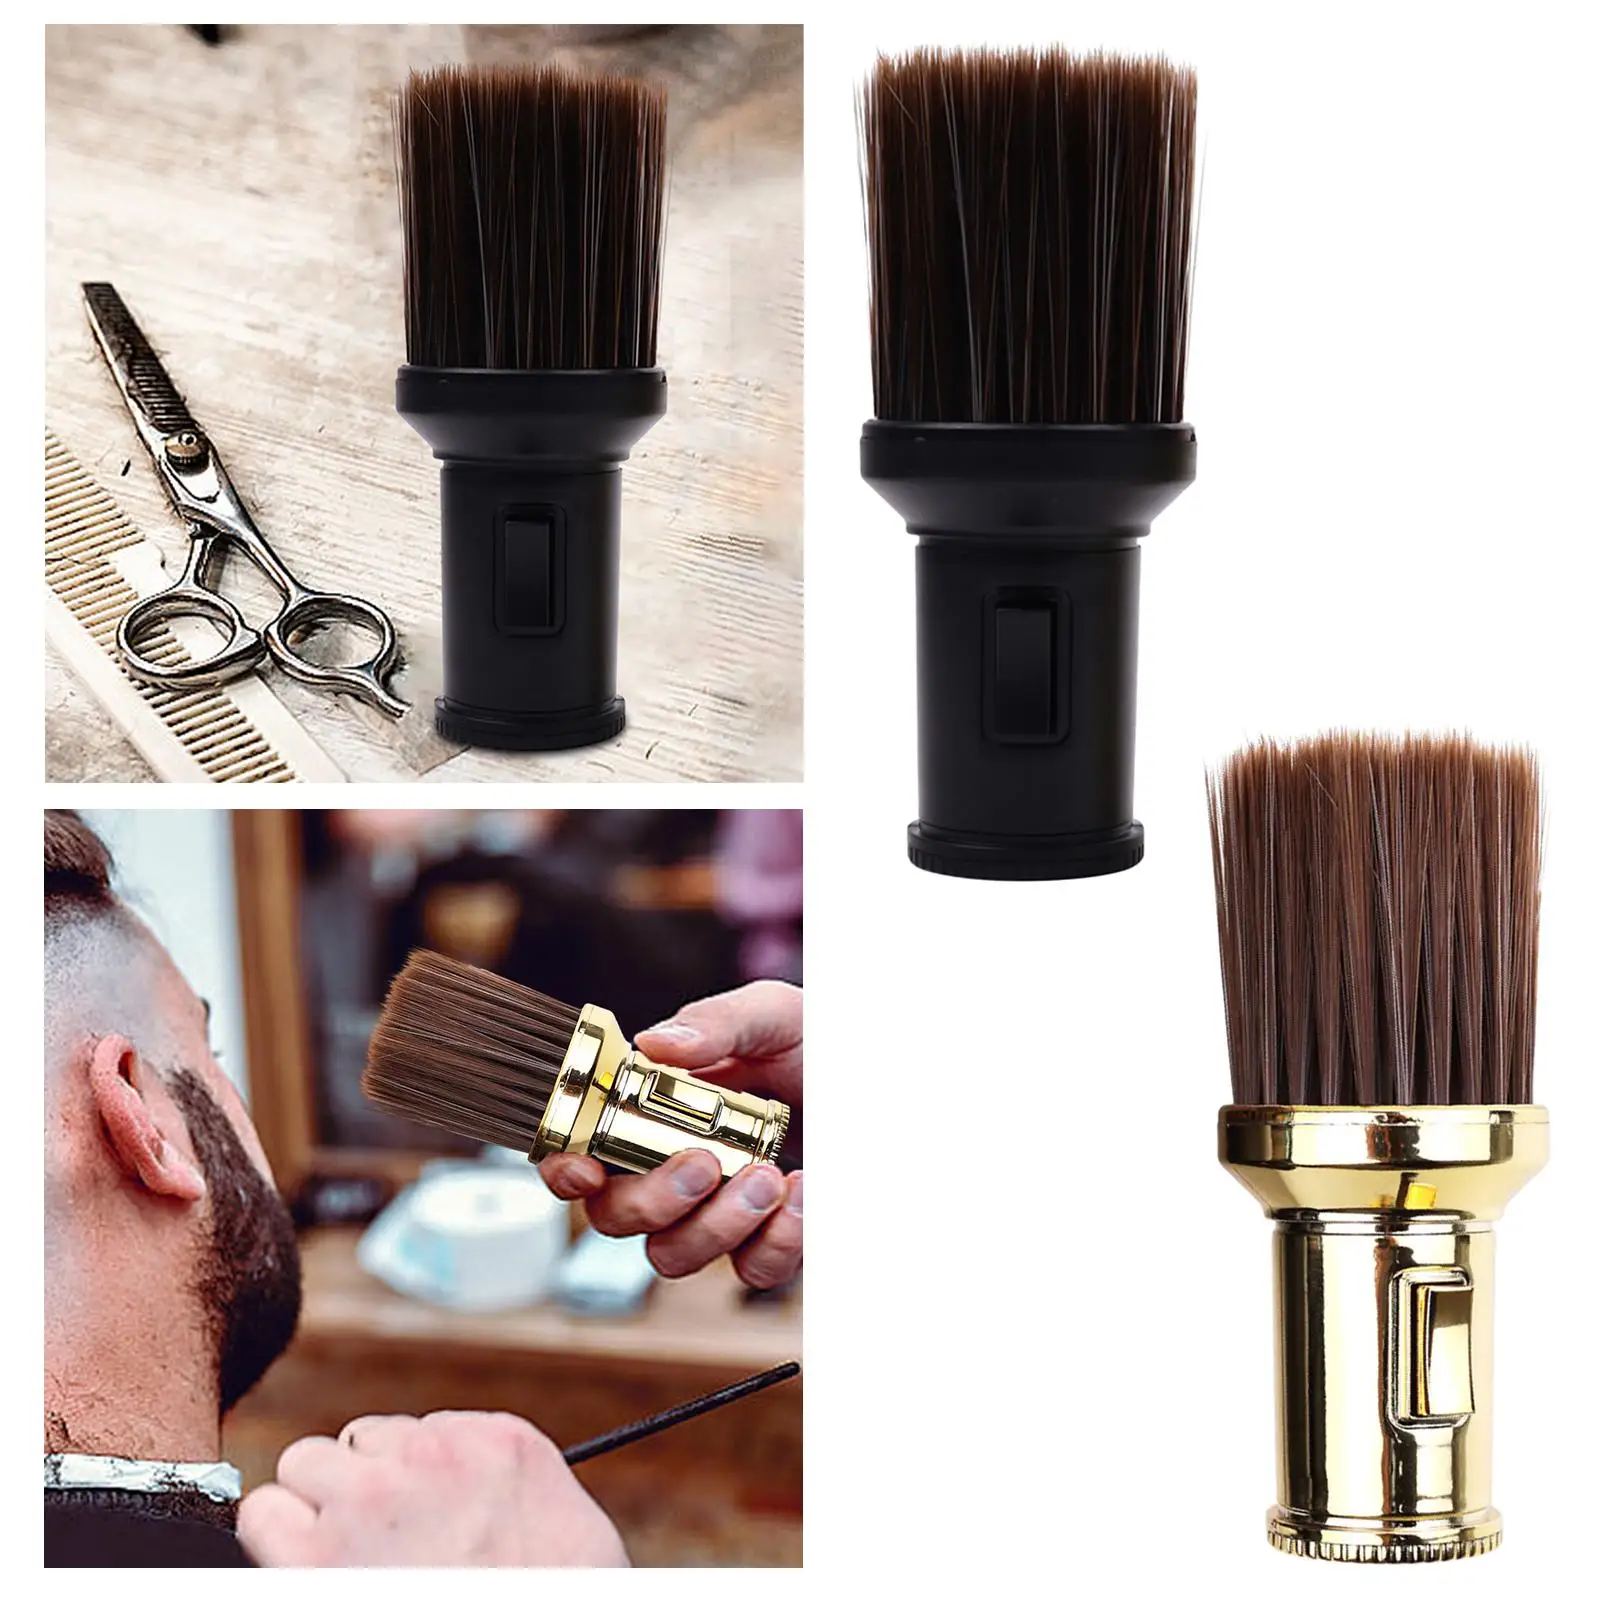 Neck Duster Hair Styling Brush Soft Brush Hairbrush Hair Cutting Brush for Hair Cutting Remove Broken Hair Salon Home Use Neck